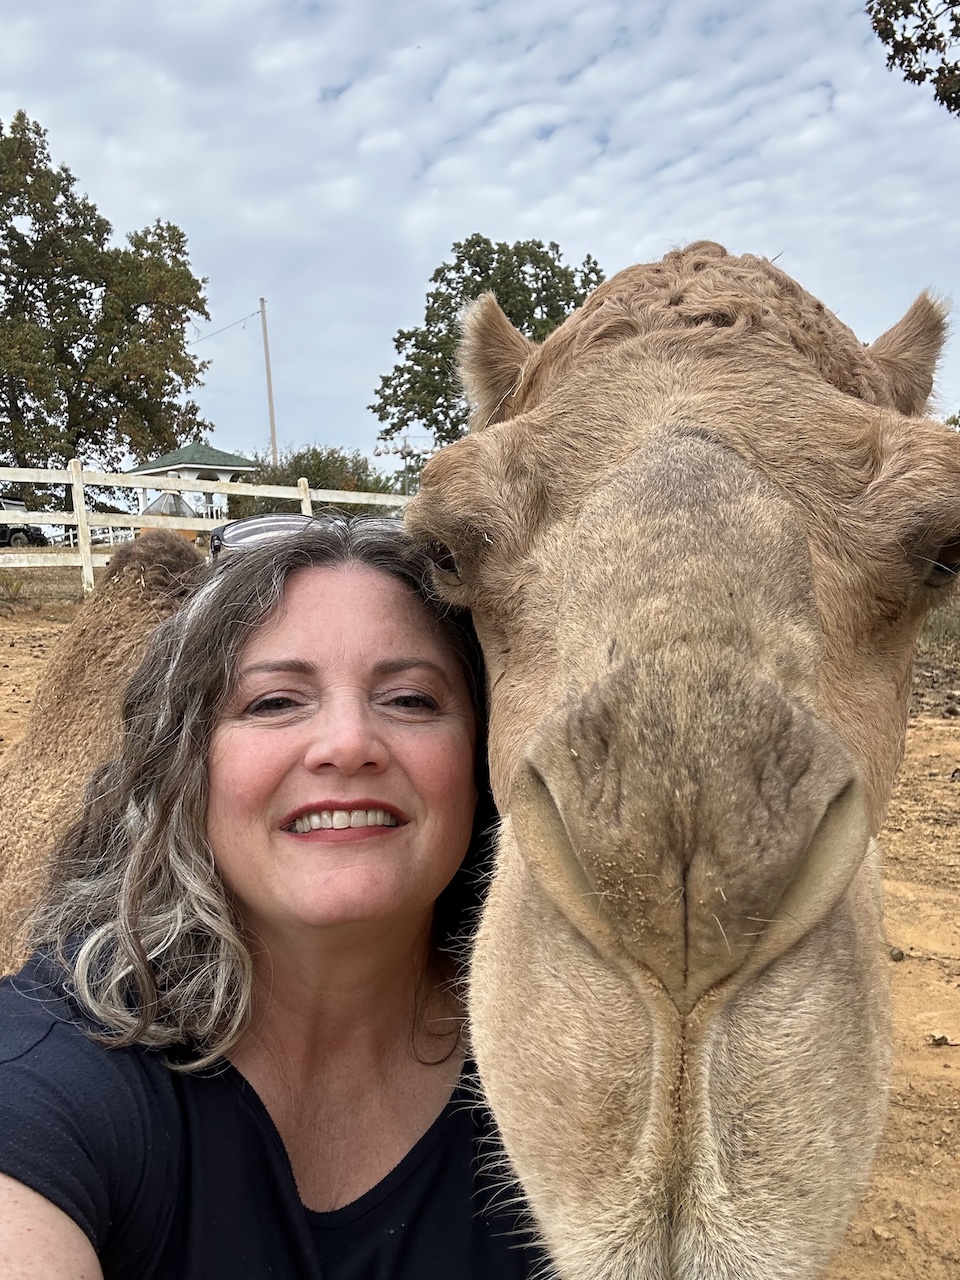 Tutor Amanda McGee posing with a camel